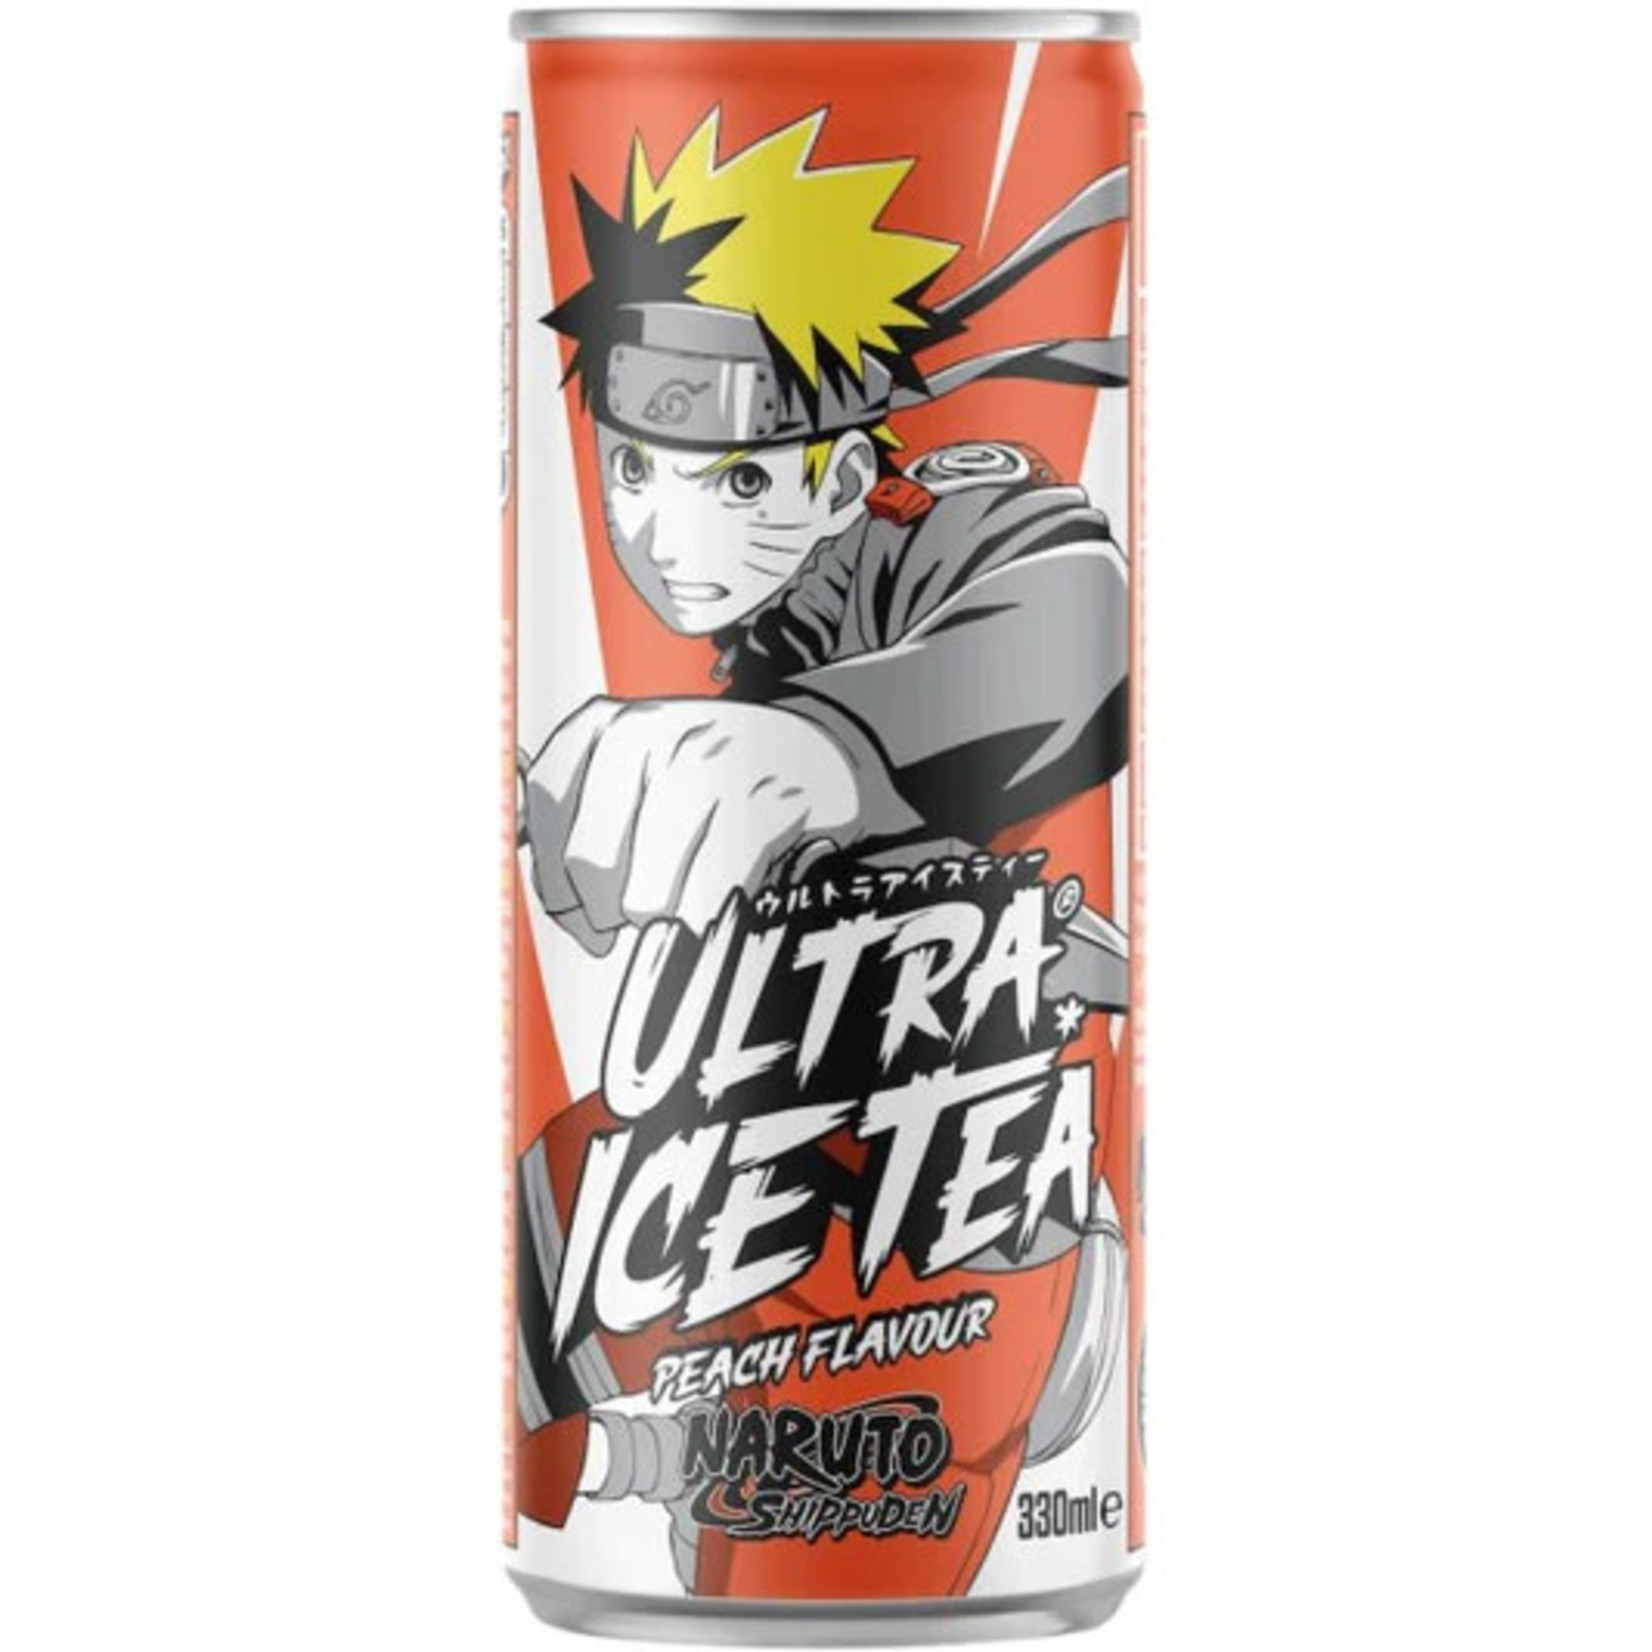 Drink Ultra Ice Tea Naruto Peach Flavor Can